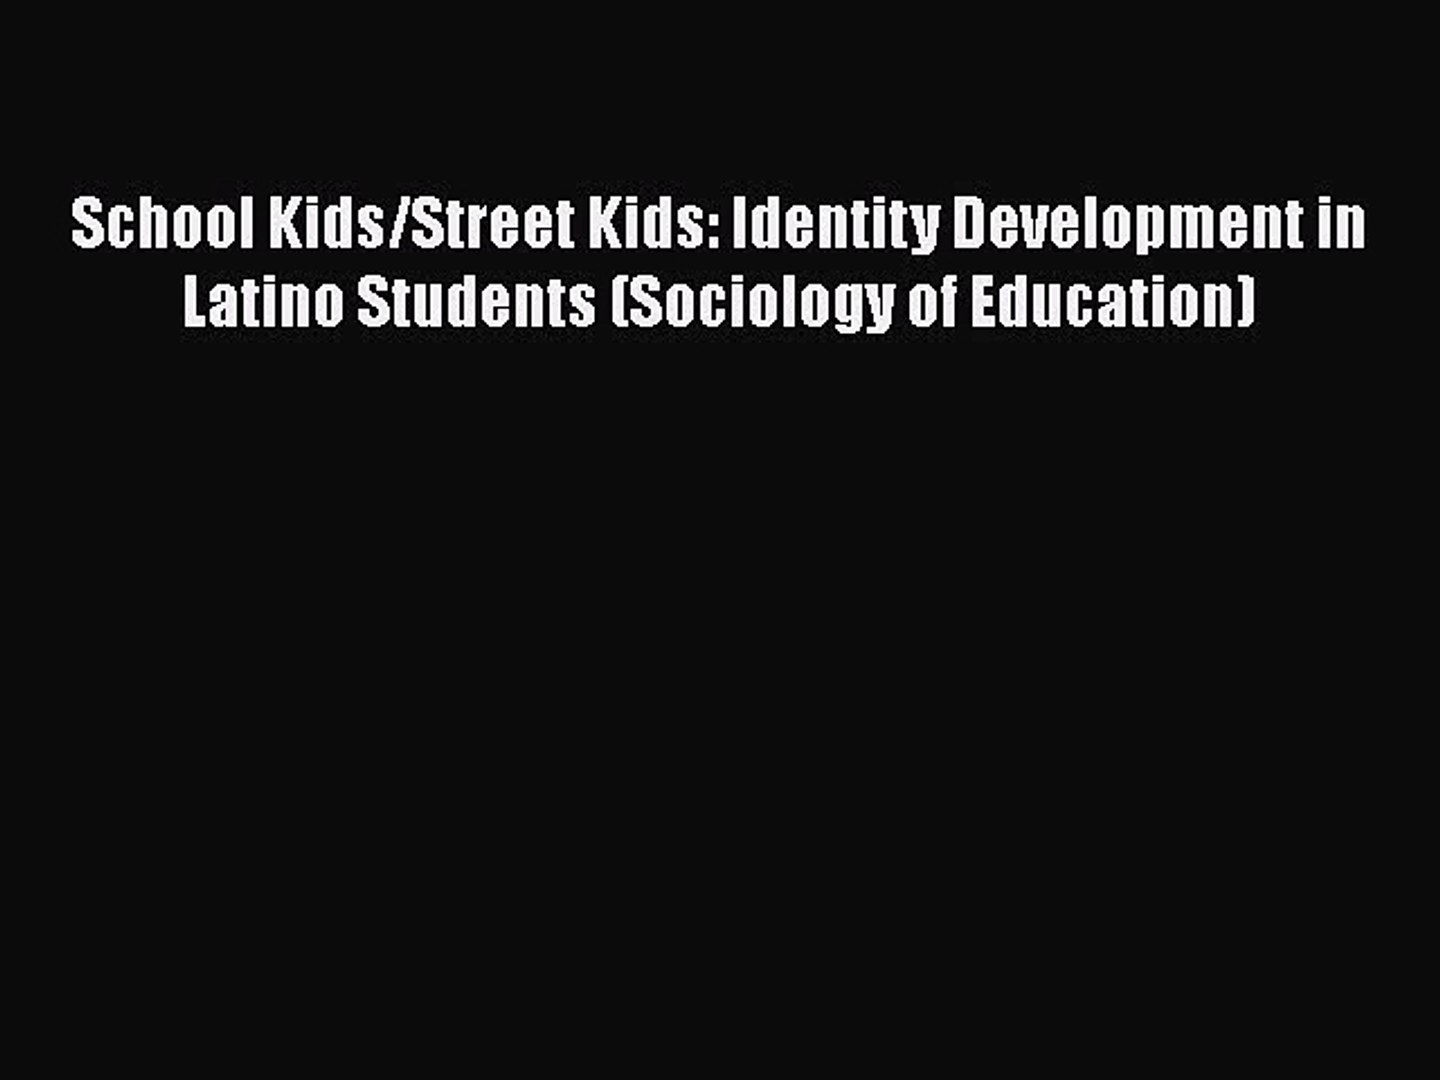 [PDF] School Kids/Street Kids: Identity Development in Latino Students (Sociology of Education)